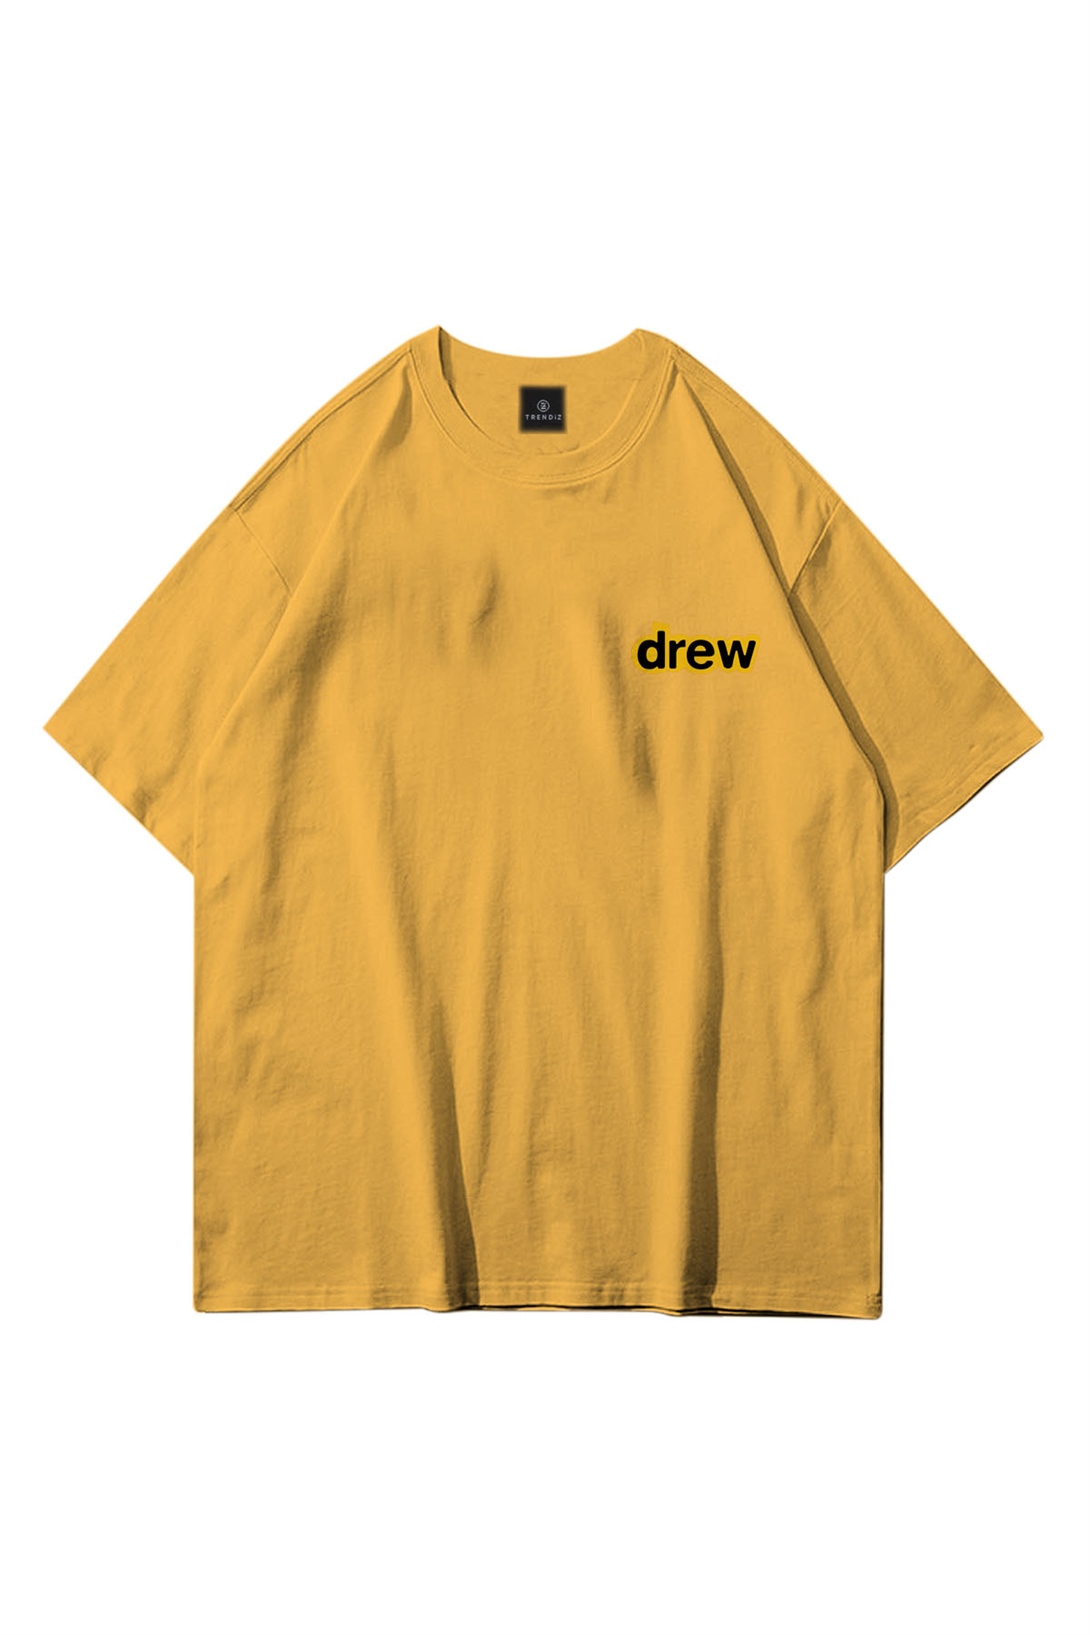 Trendiz Unisex Drew Bear Turuncu Tshirt